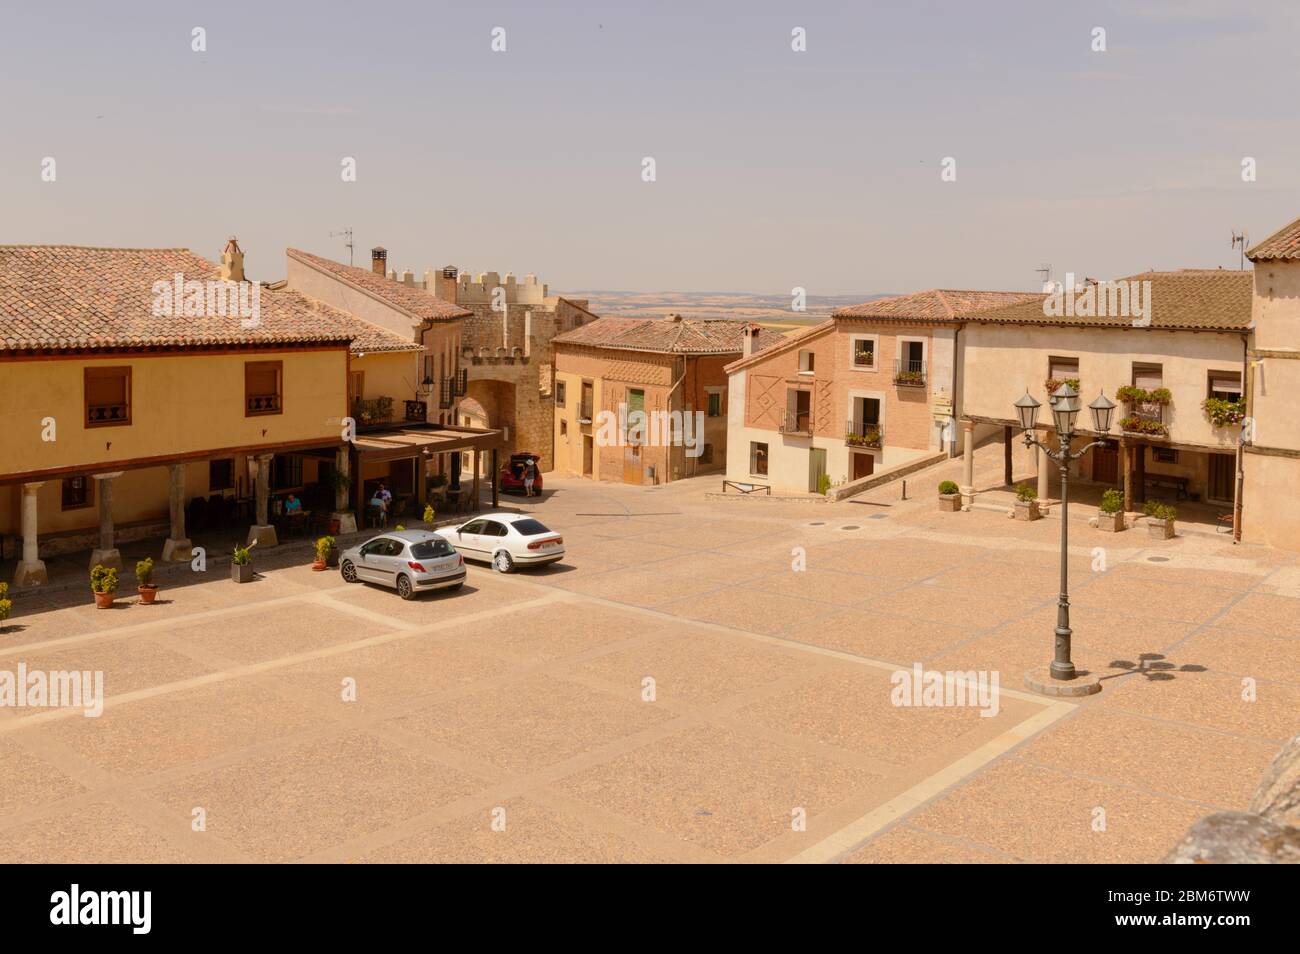 Wonderful Arcipreste  Square Of Medieval Origin In Hita. July 23, 2019. Hita Guadalajara Castilla La Mancha. Spain. Travel Tourism Holidays Stock Photo